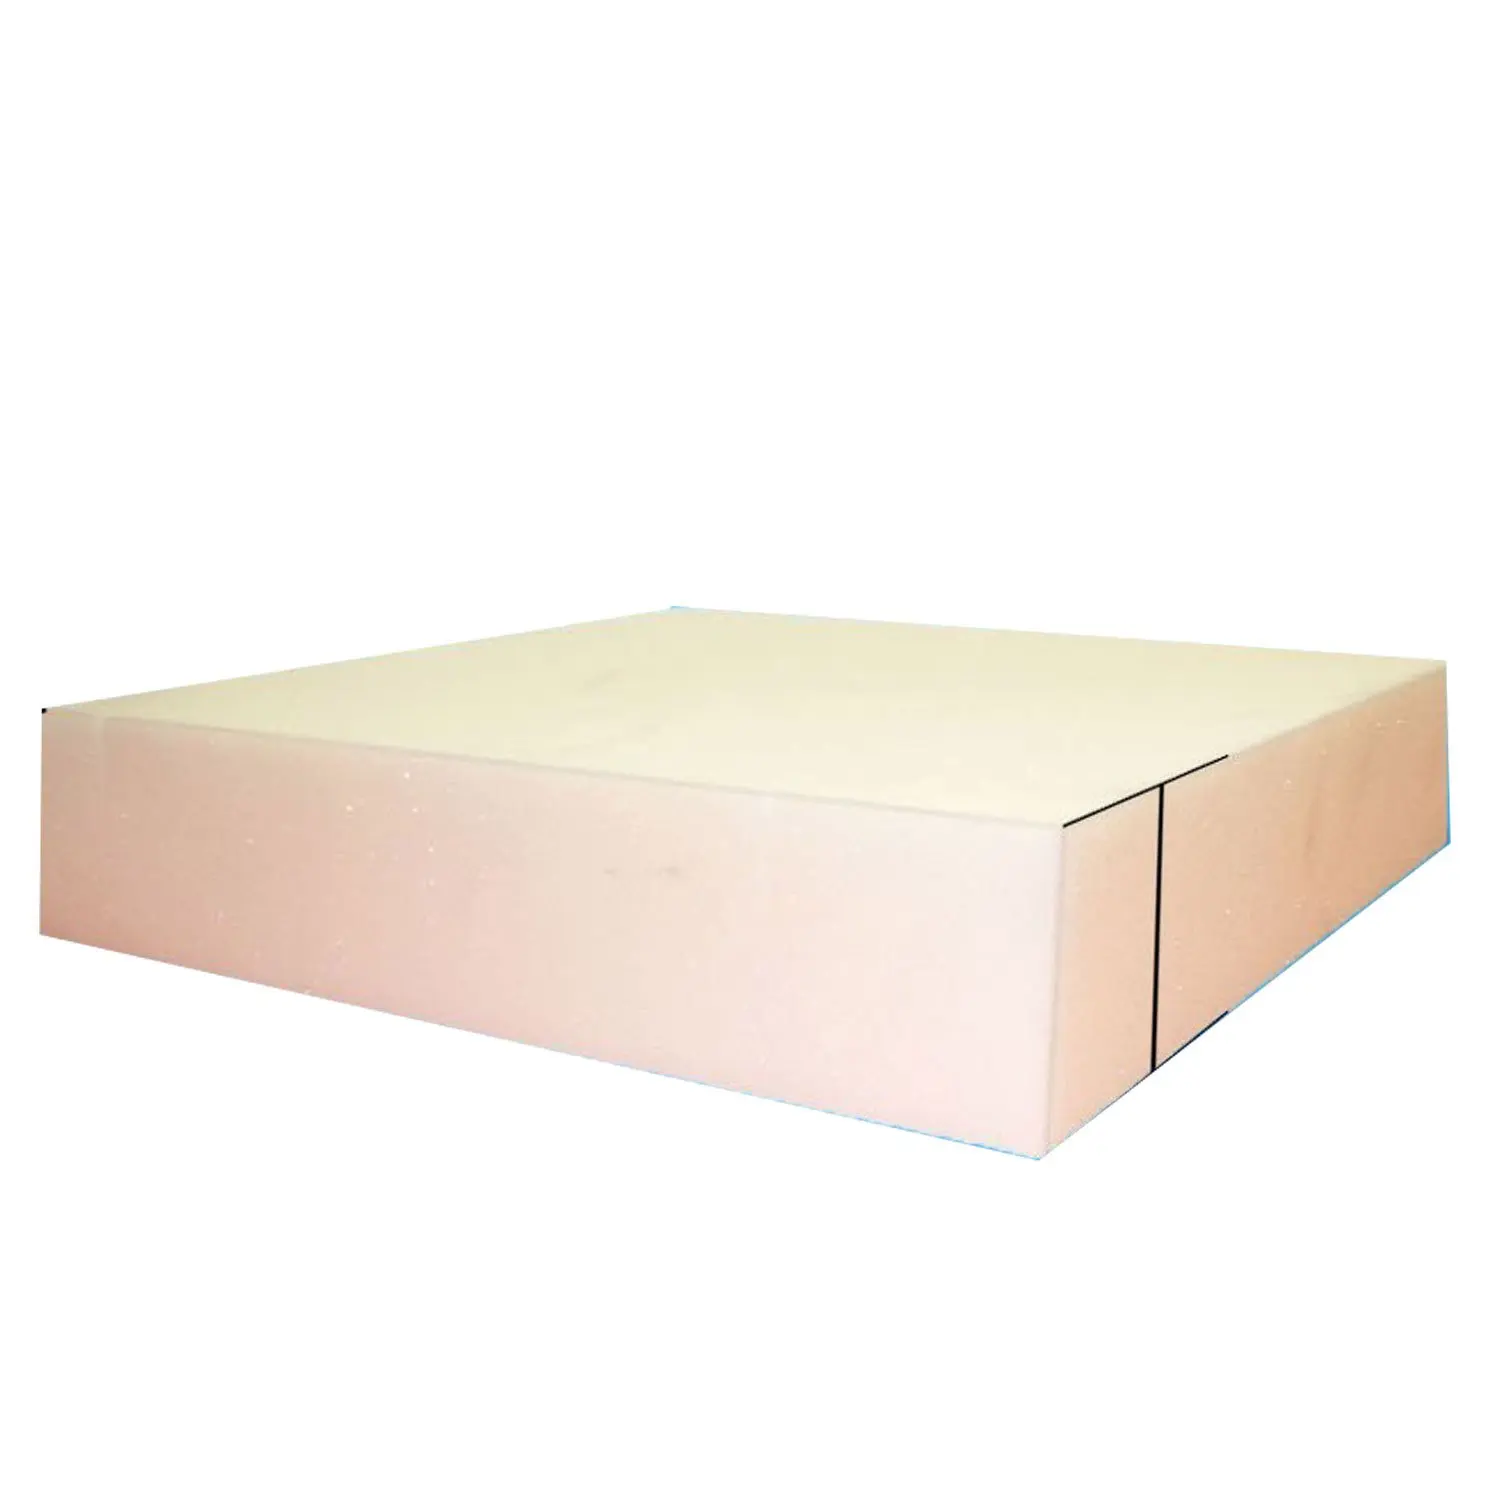 Foam Padding 1 2x24x72 Mybecca Upholstery Foam Cushion Density